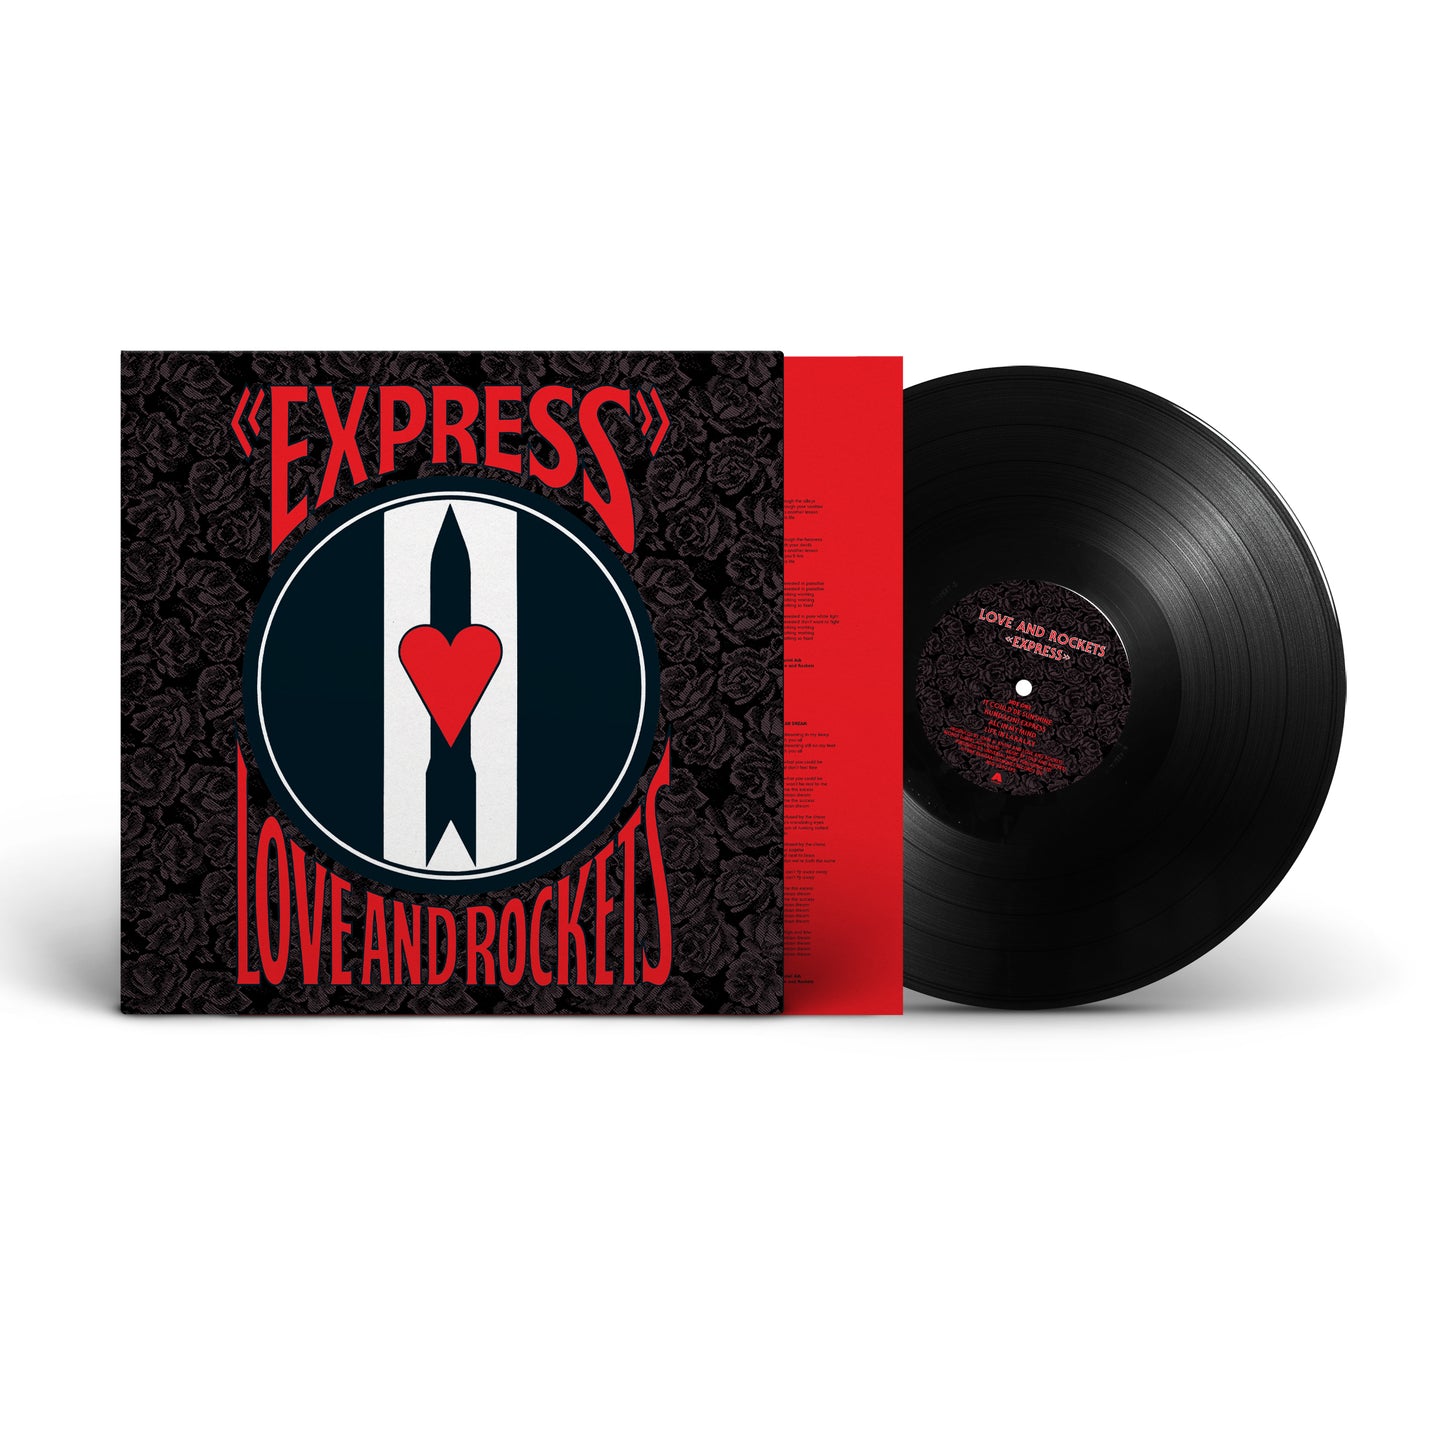 Love And Rockets - Express | Vinyl LP